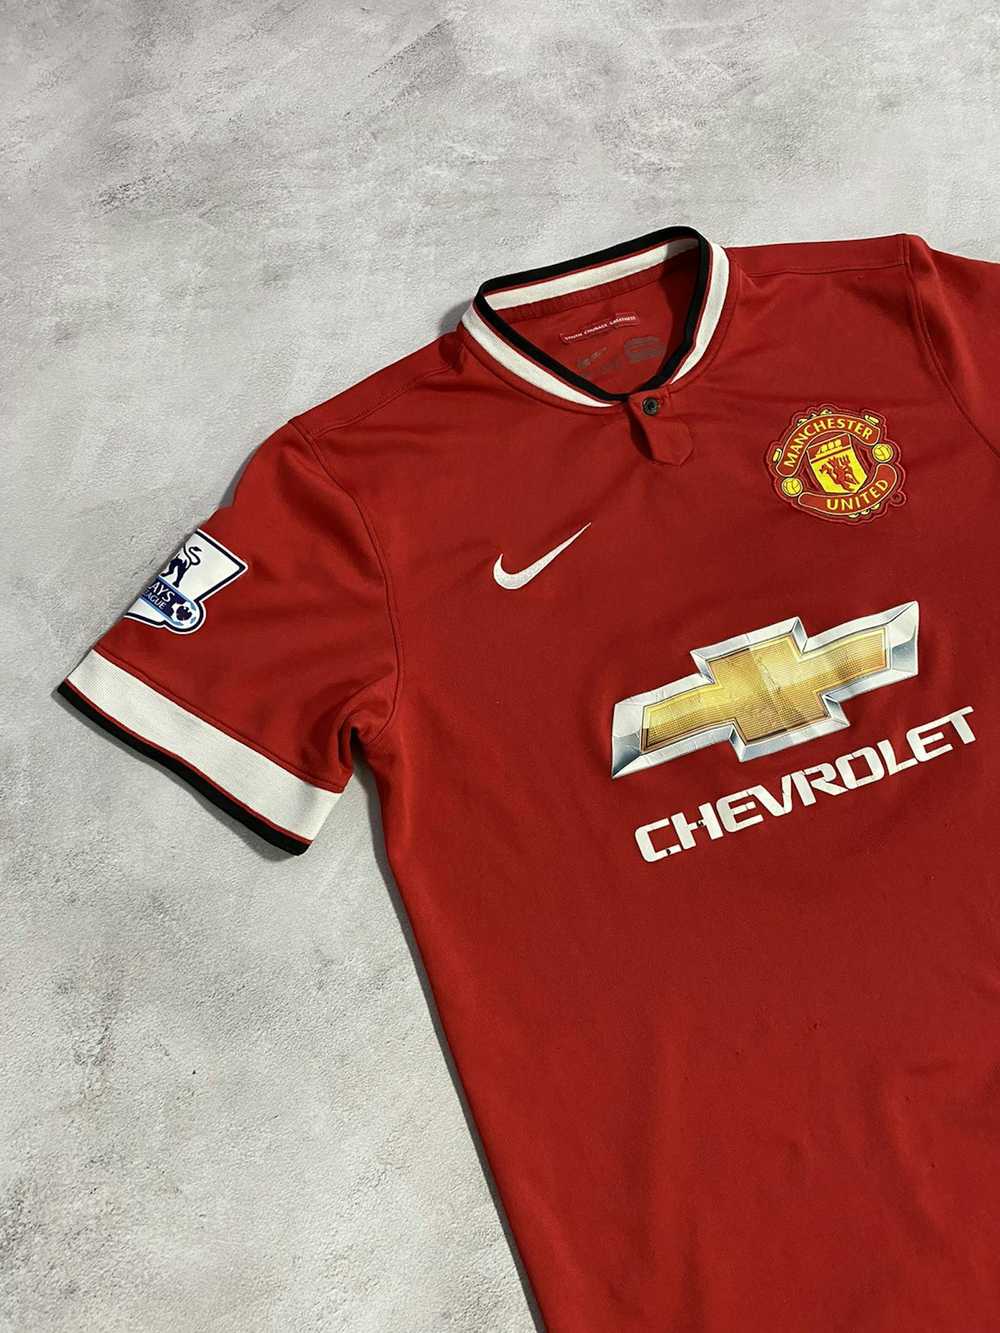 Jersey × Manchester United × Nike 2014 Jersey Nik… - image 2